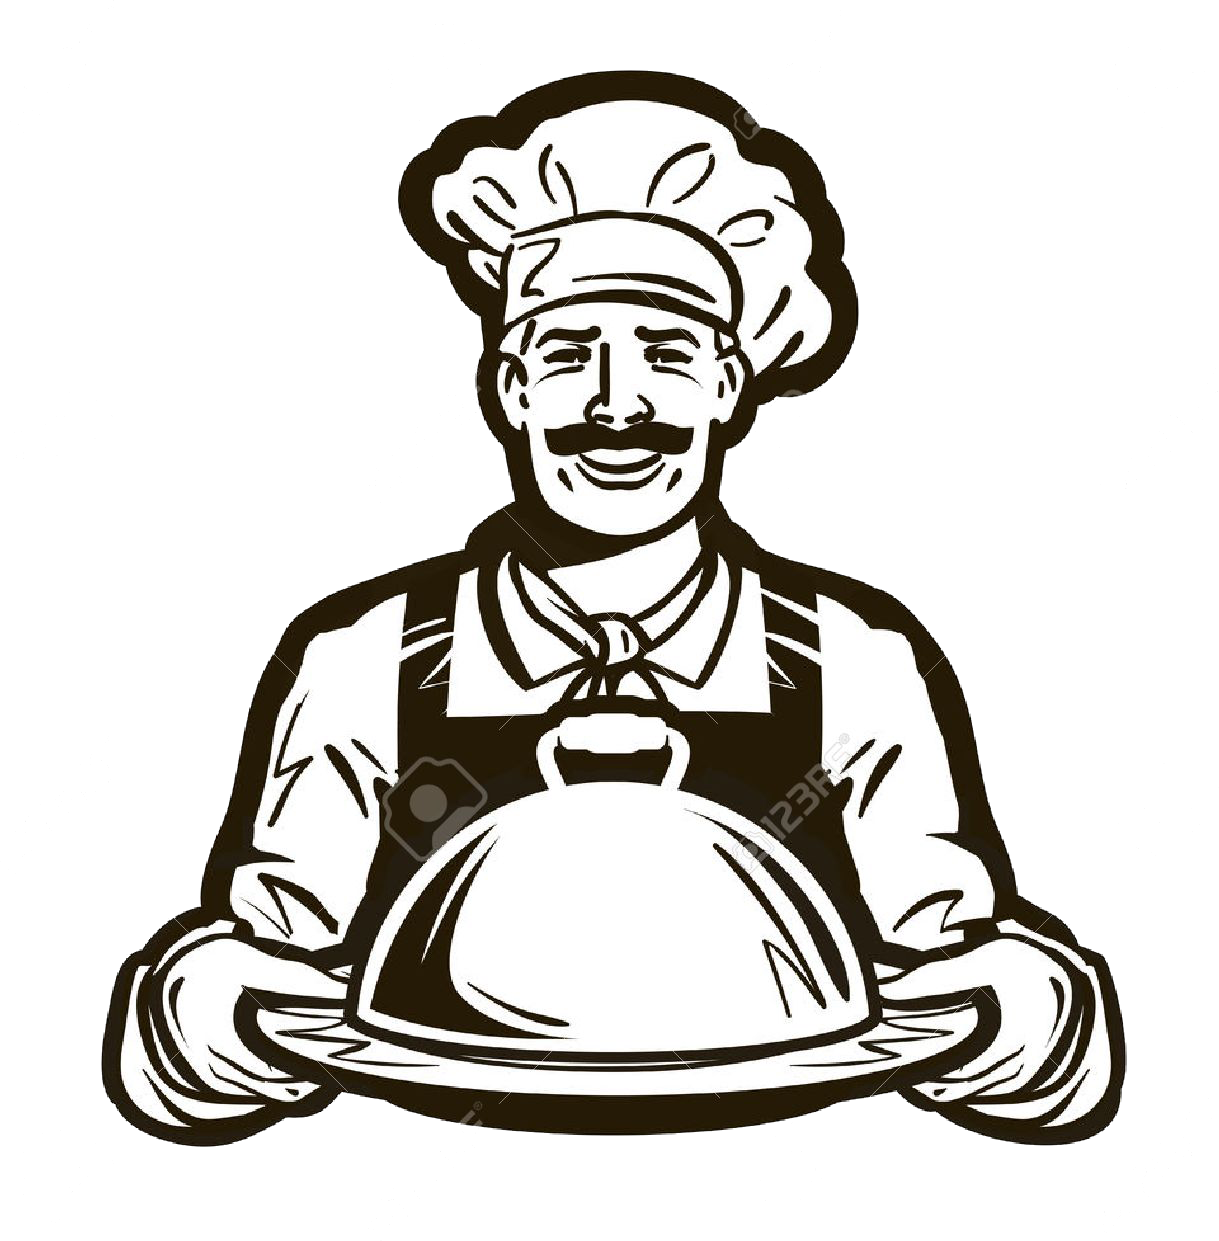 Cafe Catering Logo Clip Art - Cafe Catering Logo Clip Art (1219x1241)